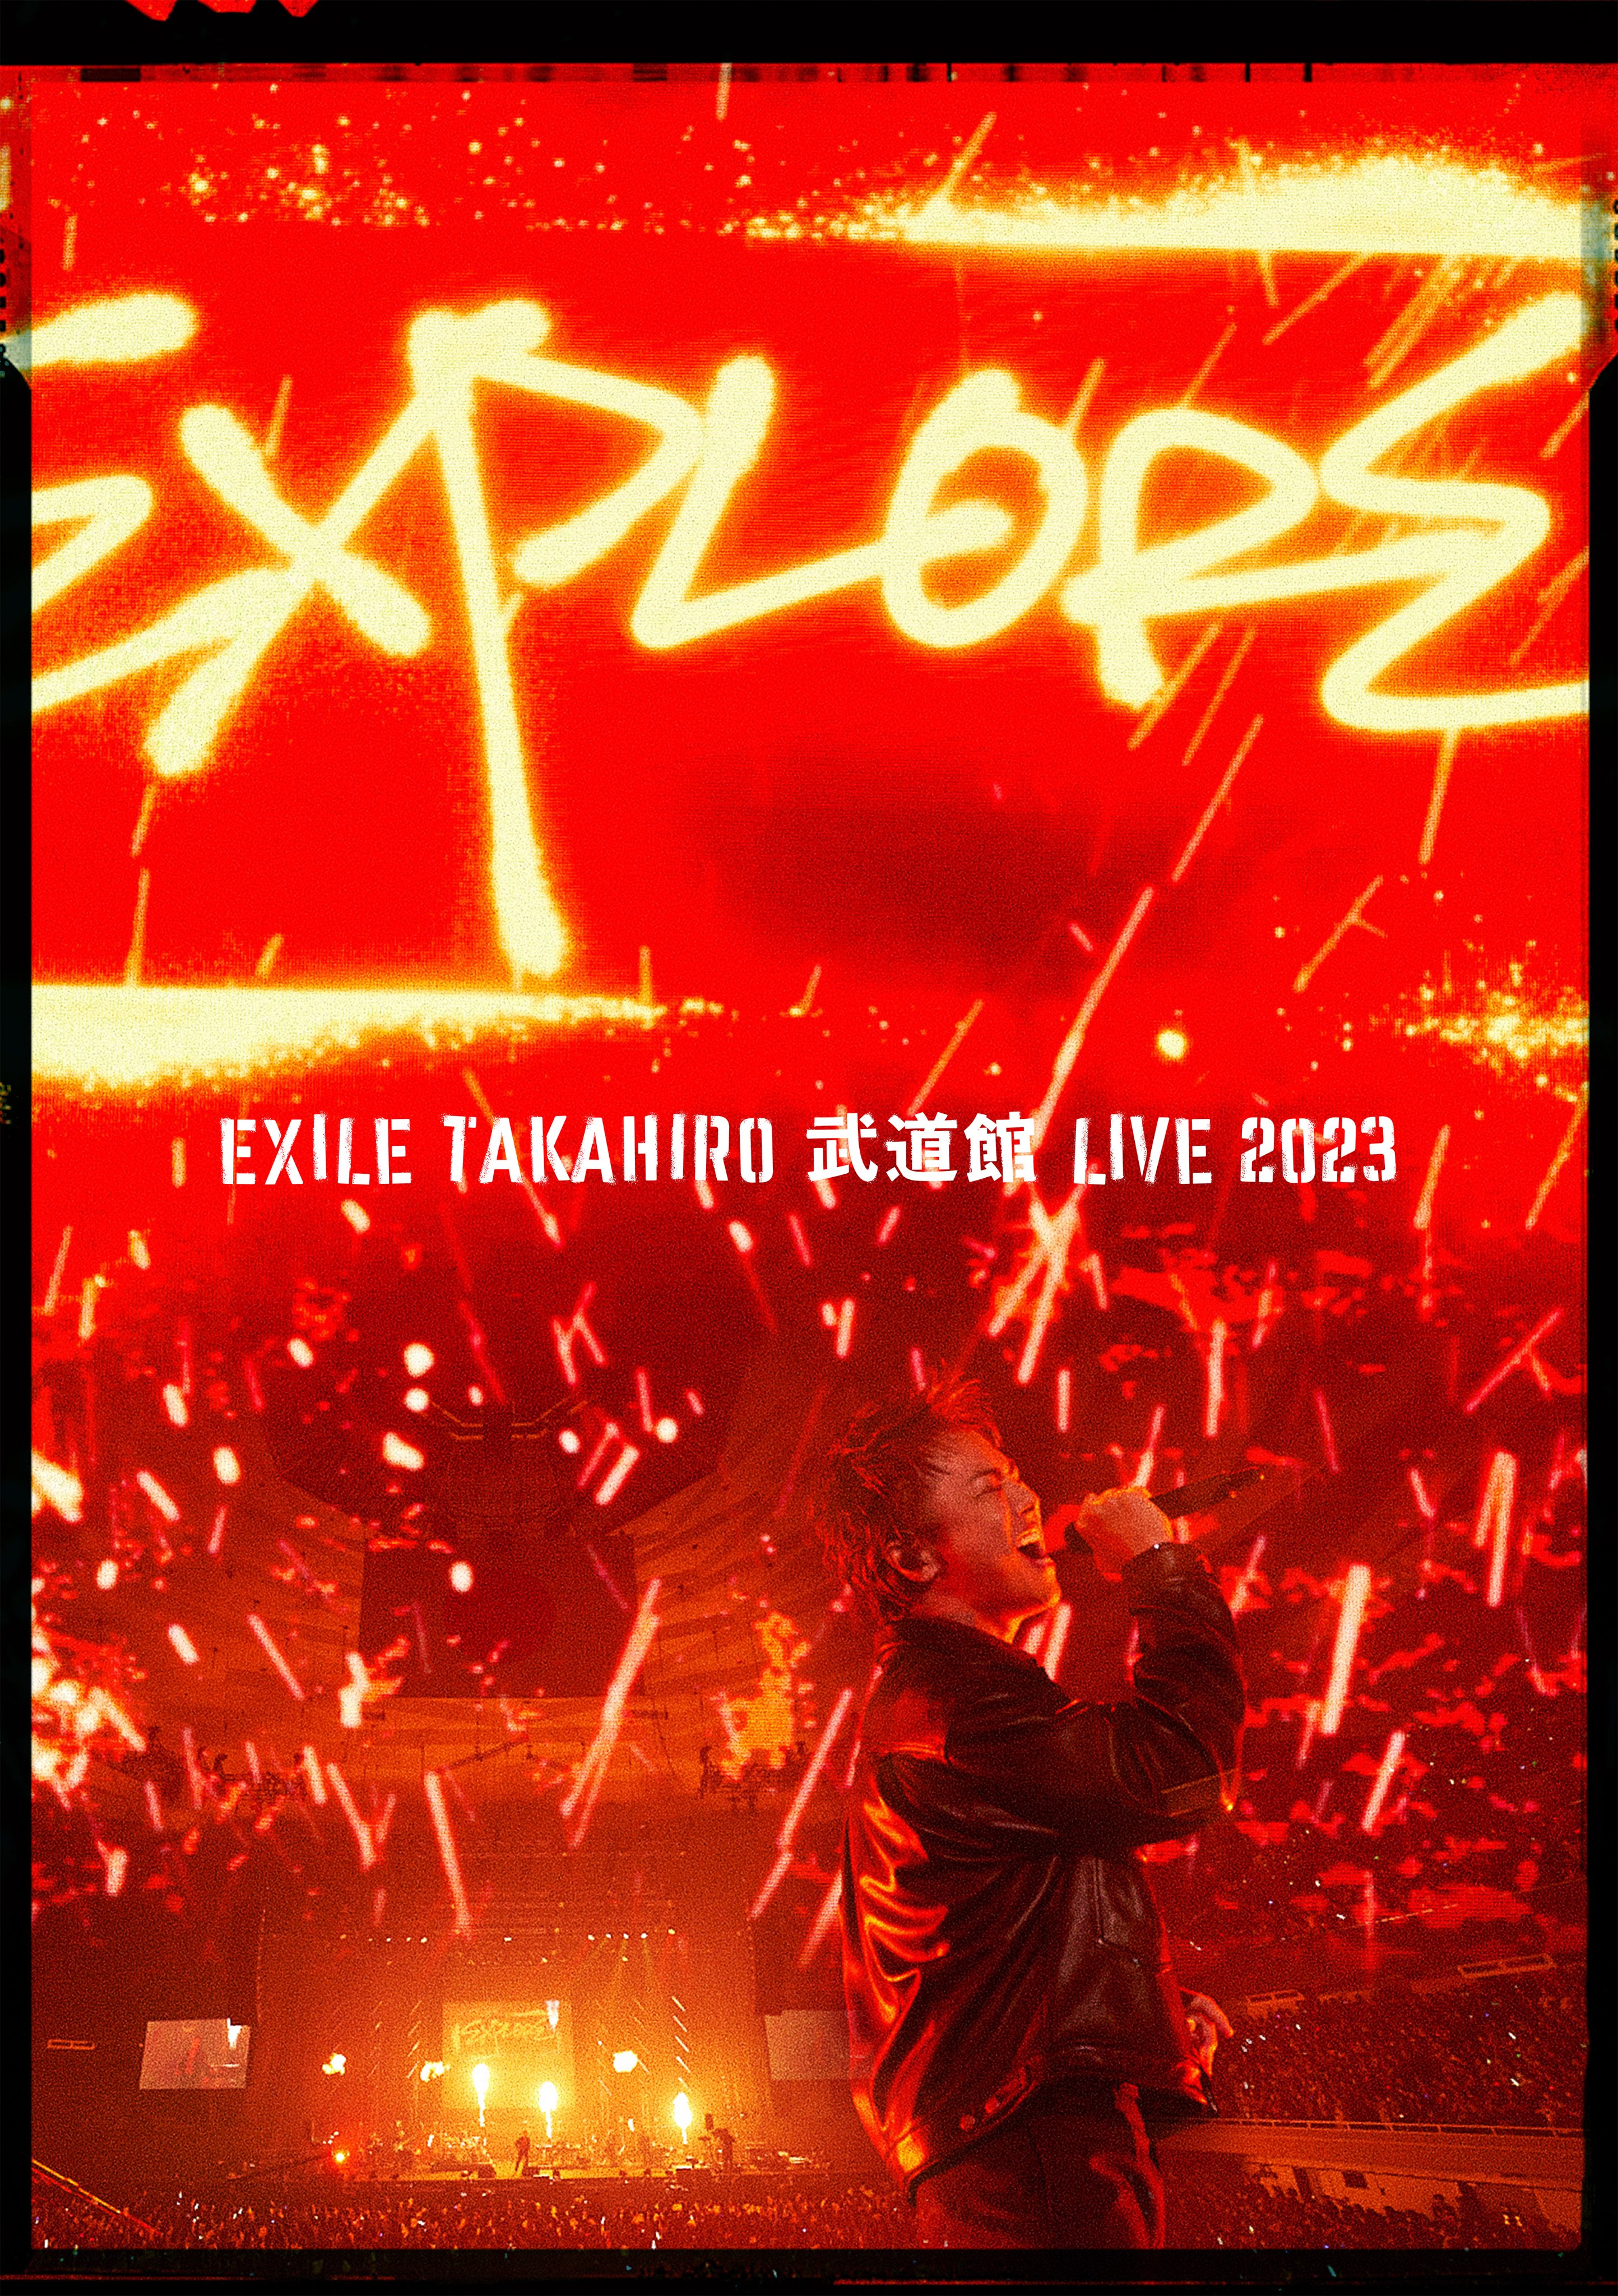 EXILE TAKAHIRO BUDOKAN LIVE 2023 